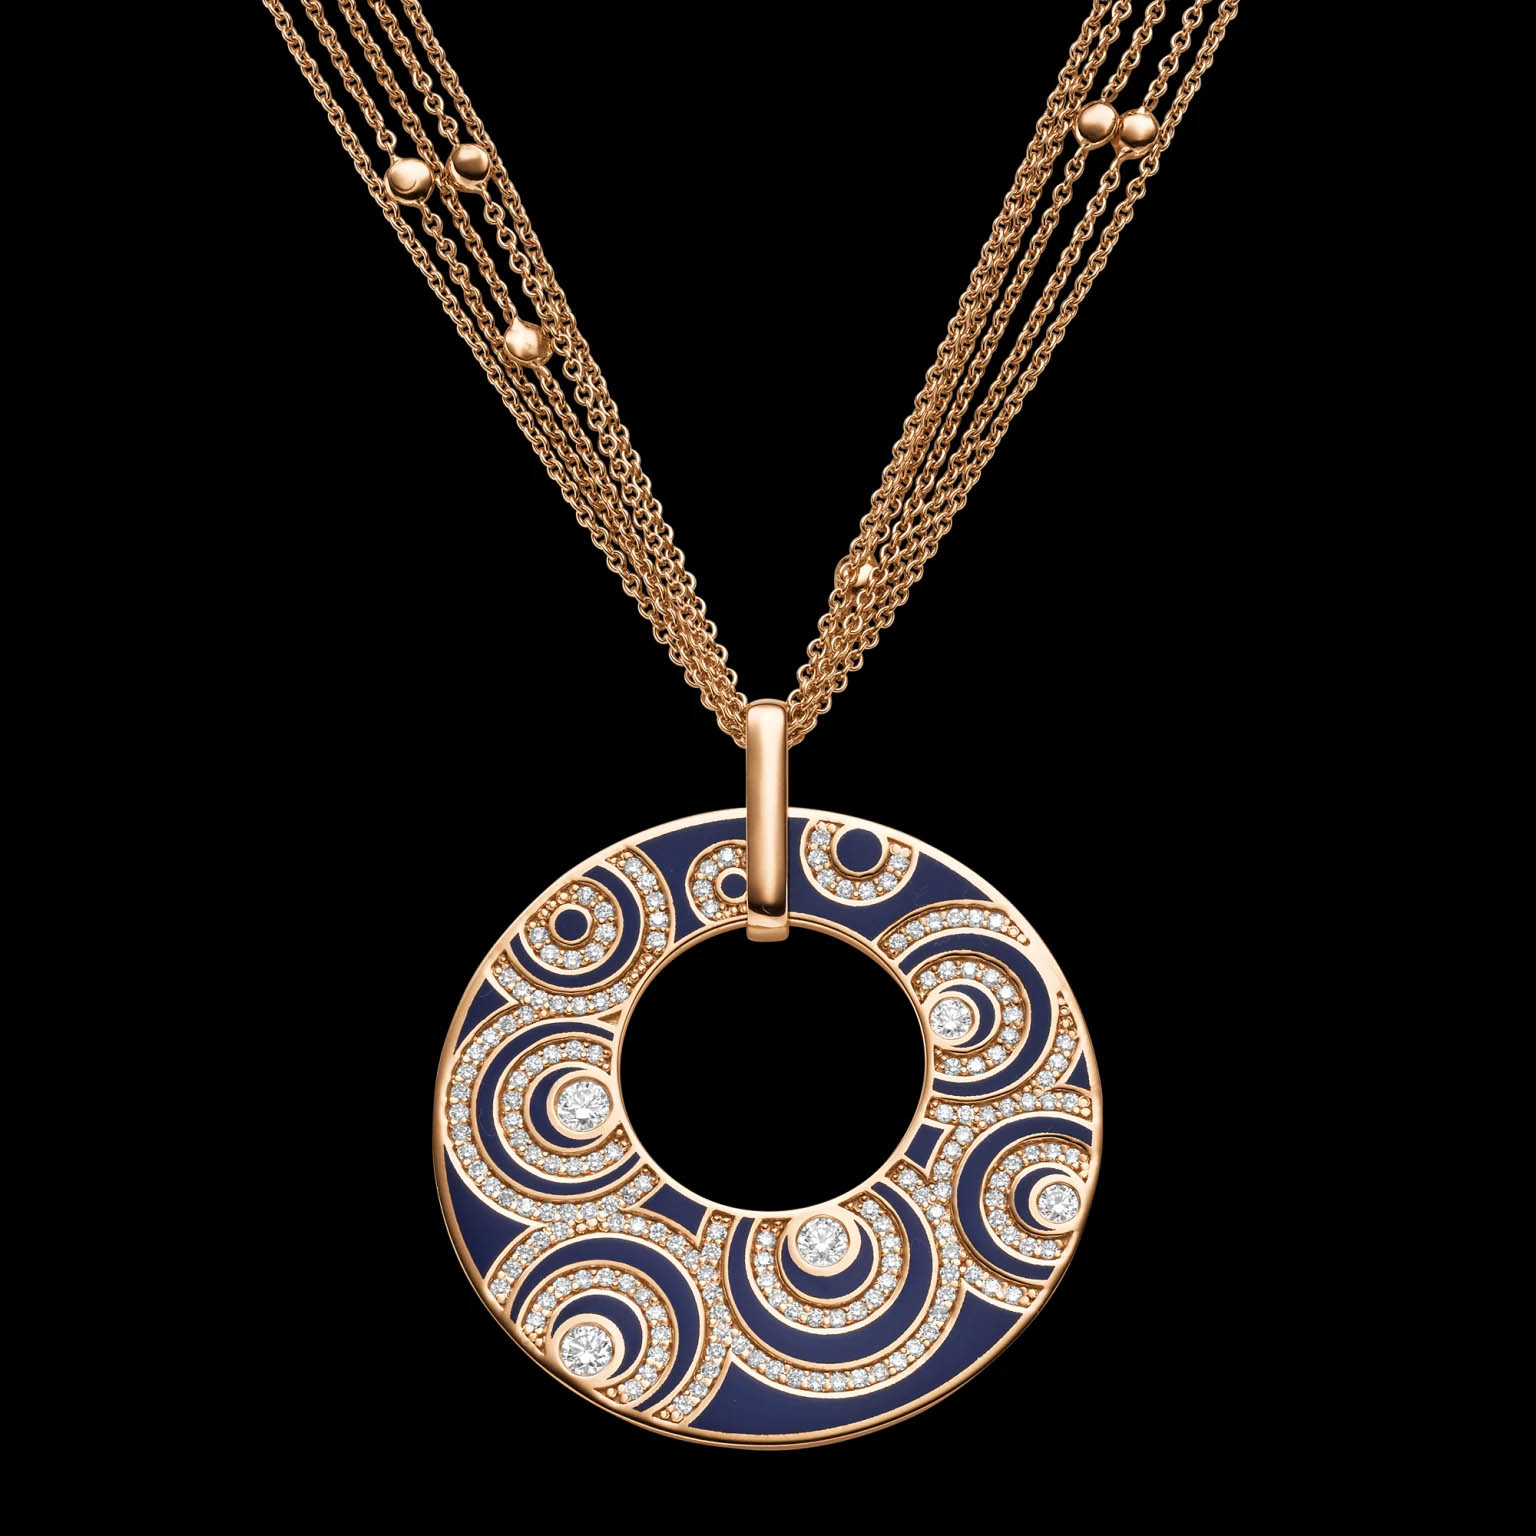 Wholesale custom made silver CZ pendant OEM/ODM Jewelry necklace jewelry manufacturer